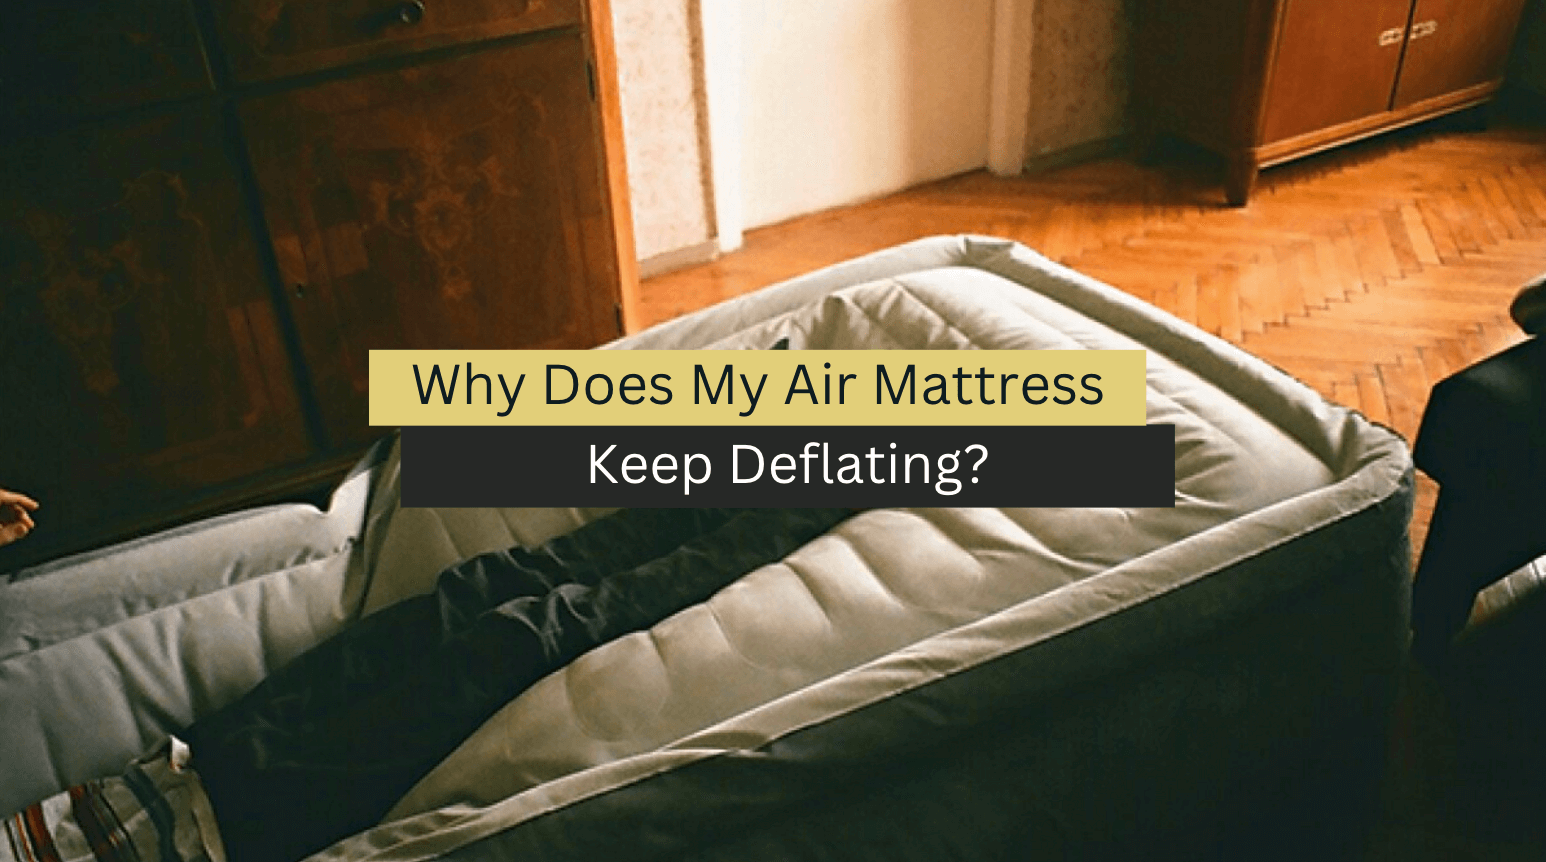 Why Does My Air Mattress Keep Deflating?